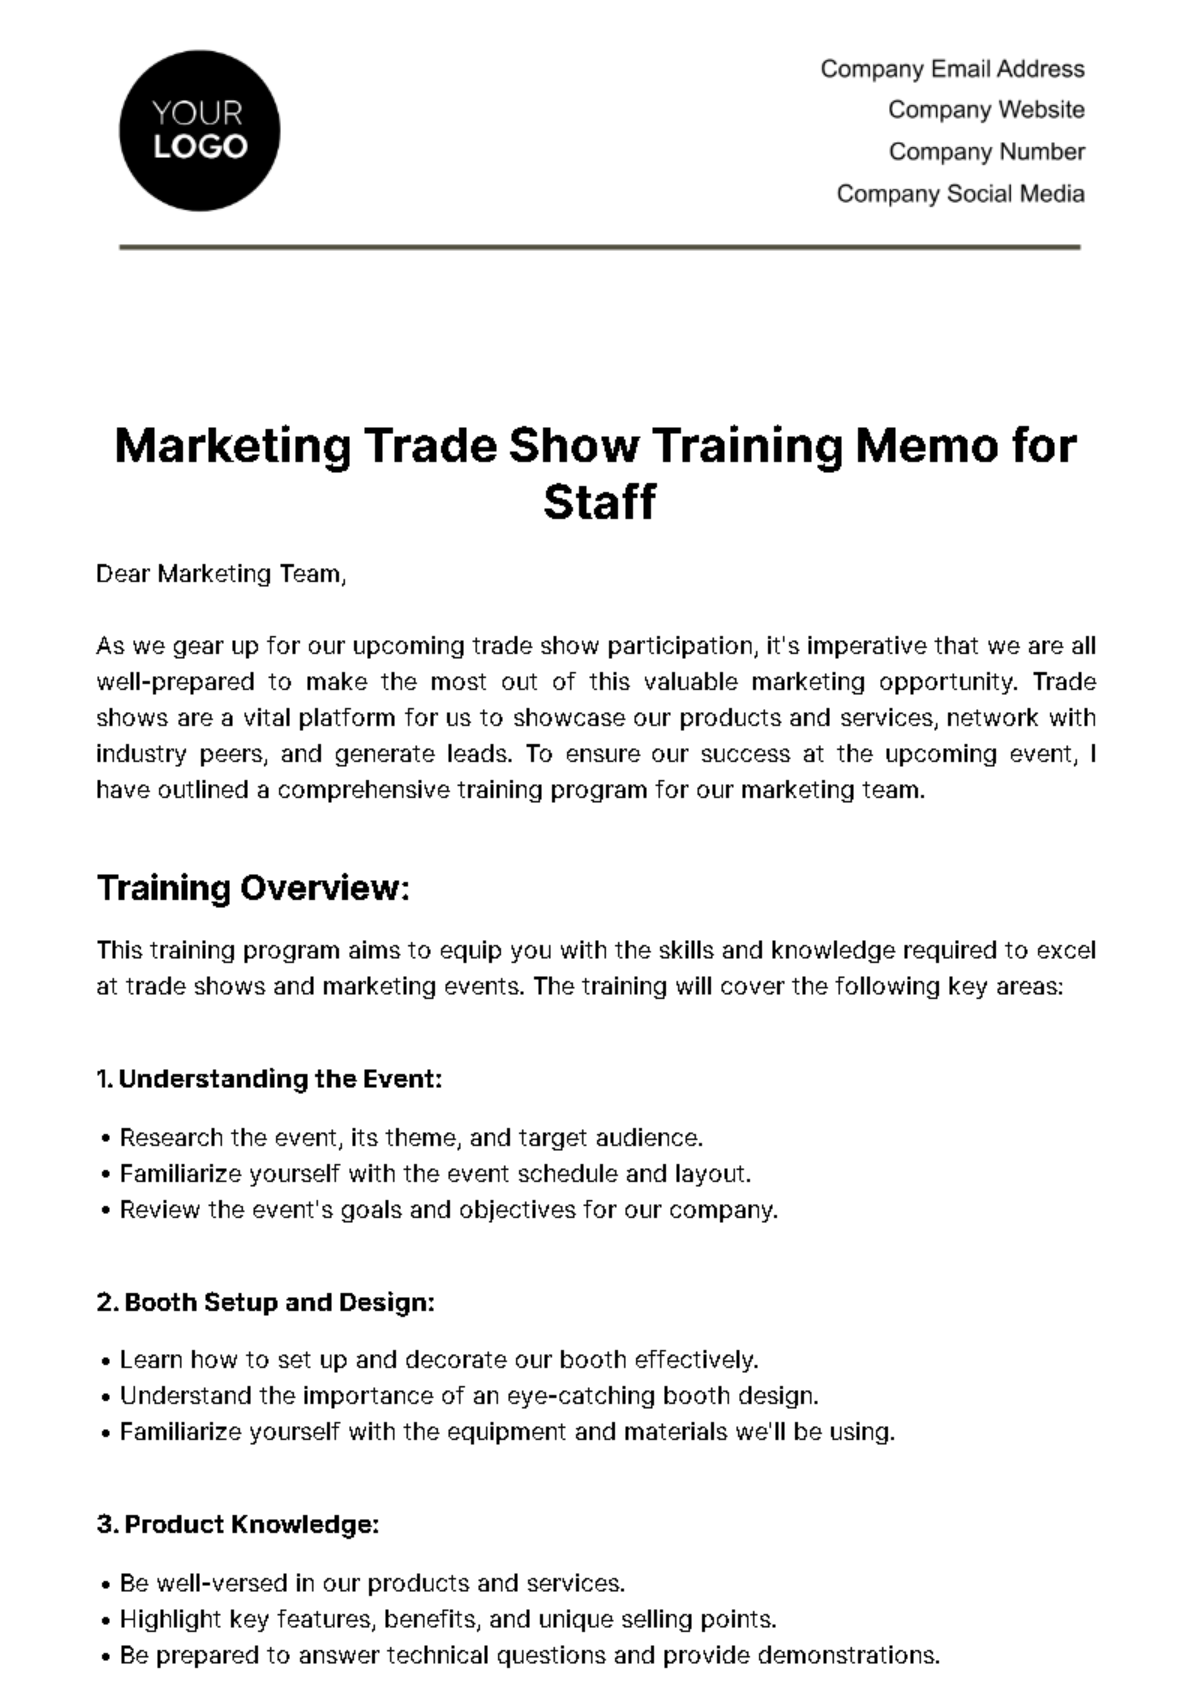 Free Marketing Trade Show Training Memo for Staff Template